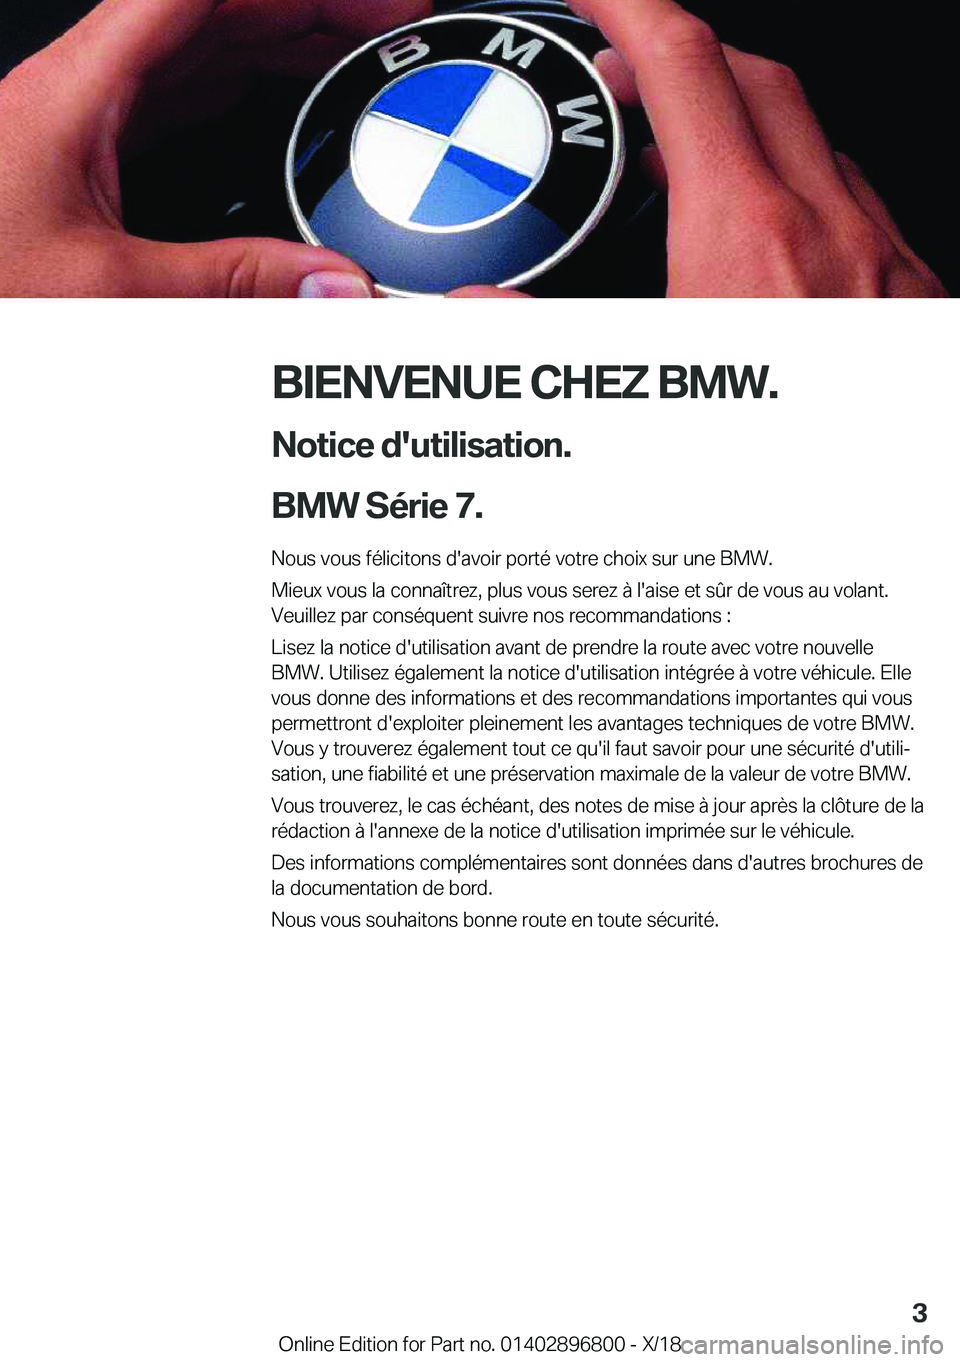 BMW 7 SERIES 2019  Notices Demploi (in French) �B�I�E�N�V�E�N�U�E��C�H�E�Z��B�M�W�.�N�o�t�i�c�e��d�'�u�t�i�l�i�s�a�t�i�o�n�.
�B�M�W��S�é�r�i�e��7�.
�N�o�u�s��v�o�u�s��f�é�l�i�c�i�t�o�n�s��d�'�a�v�o�i�r��p�o�r�t�é��v�o�t�r�e��